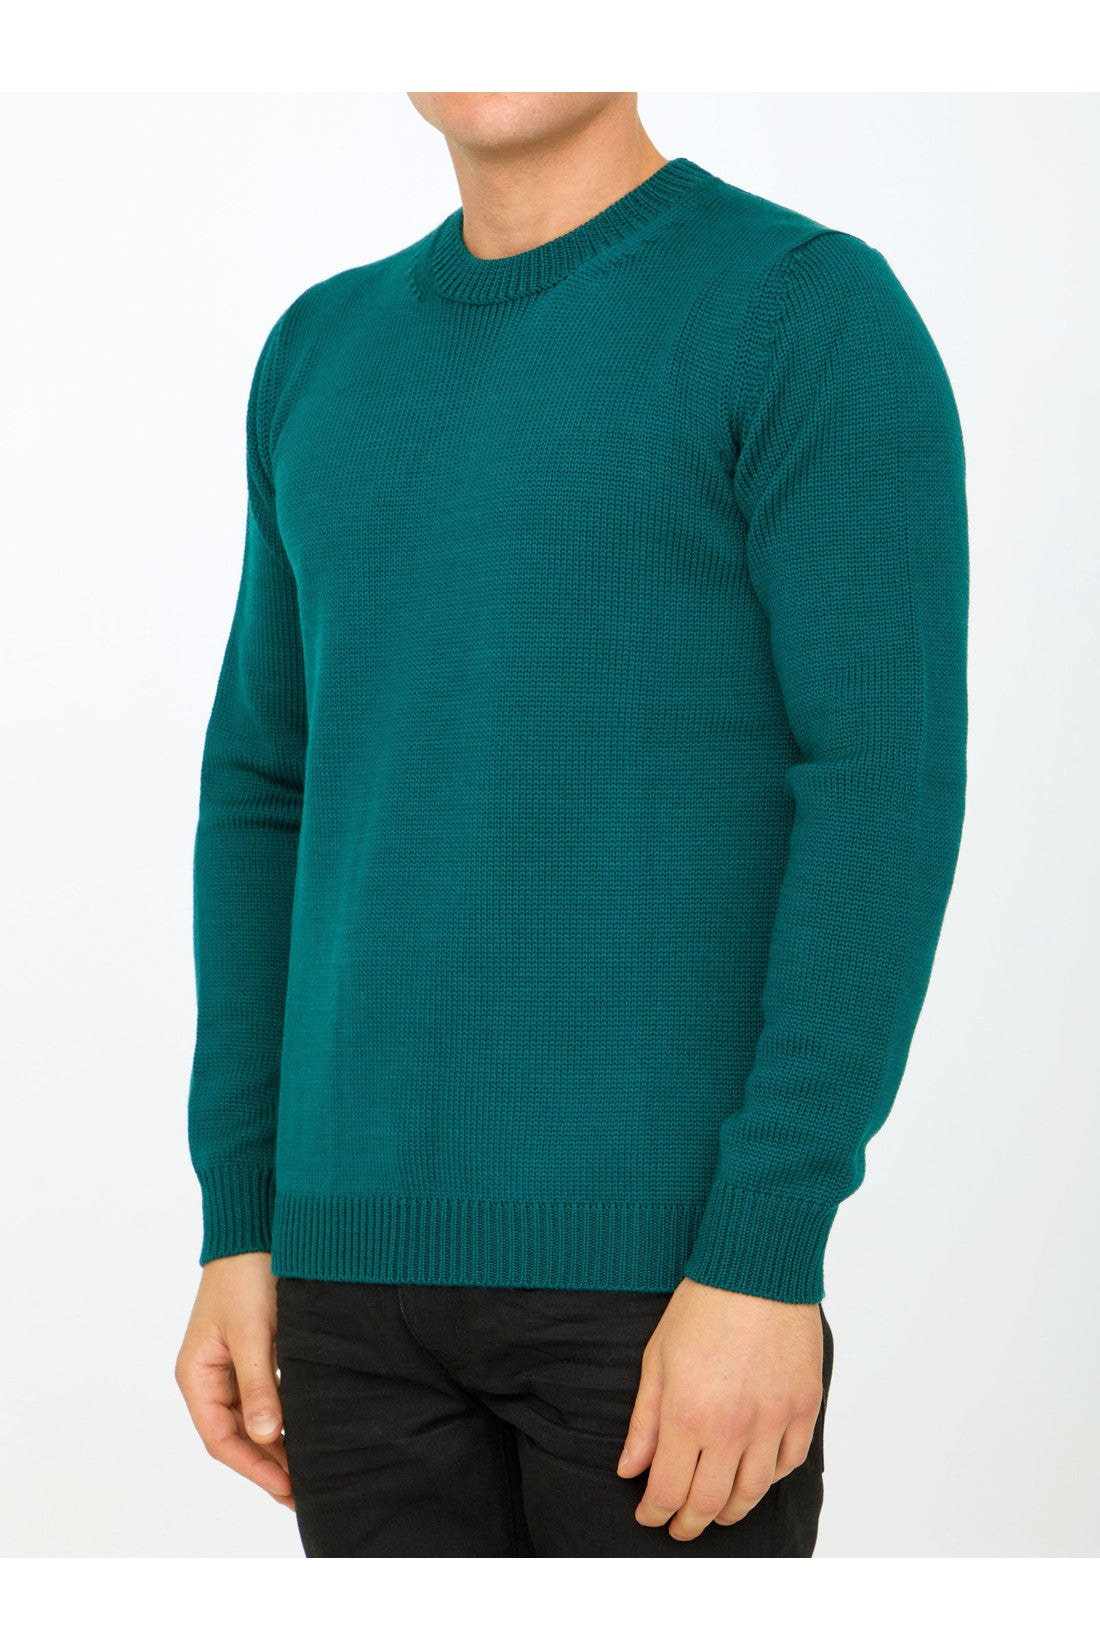 Green merino wool sweater